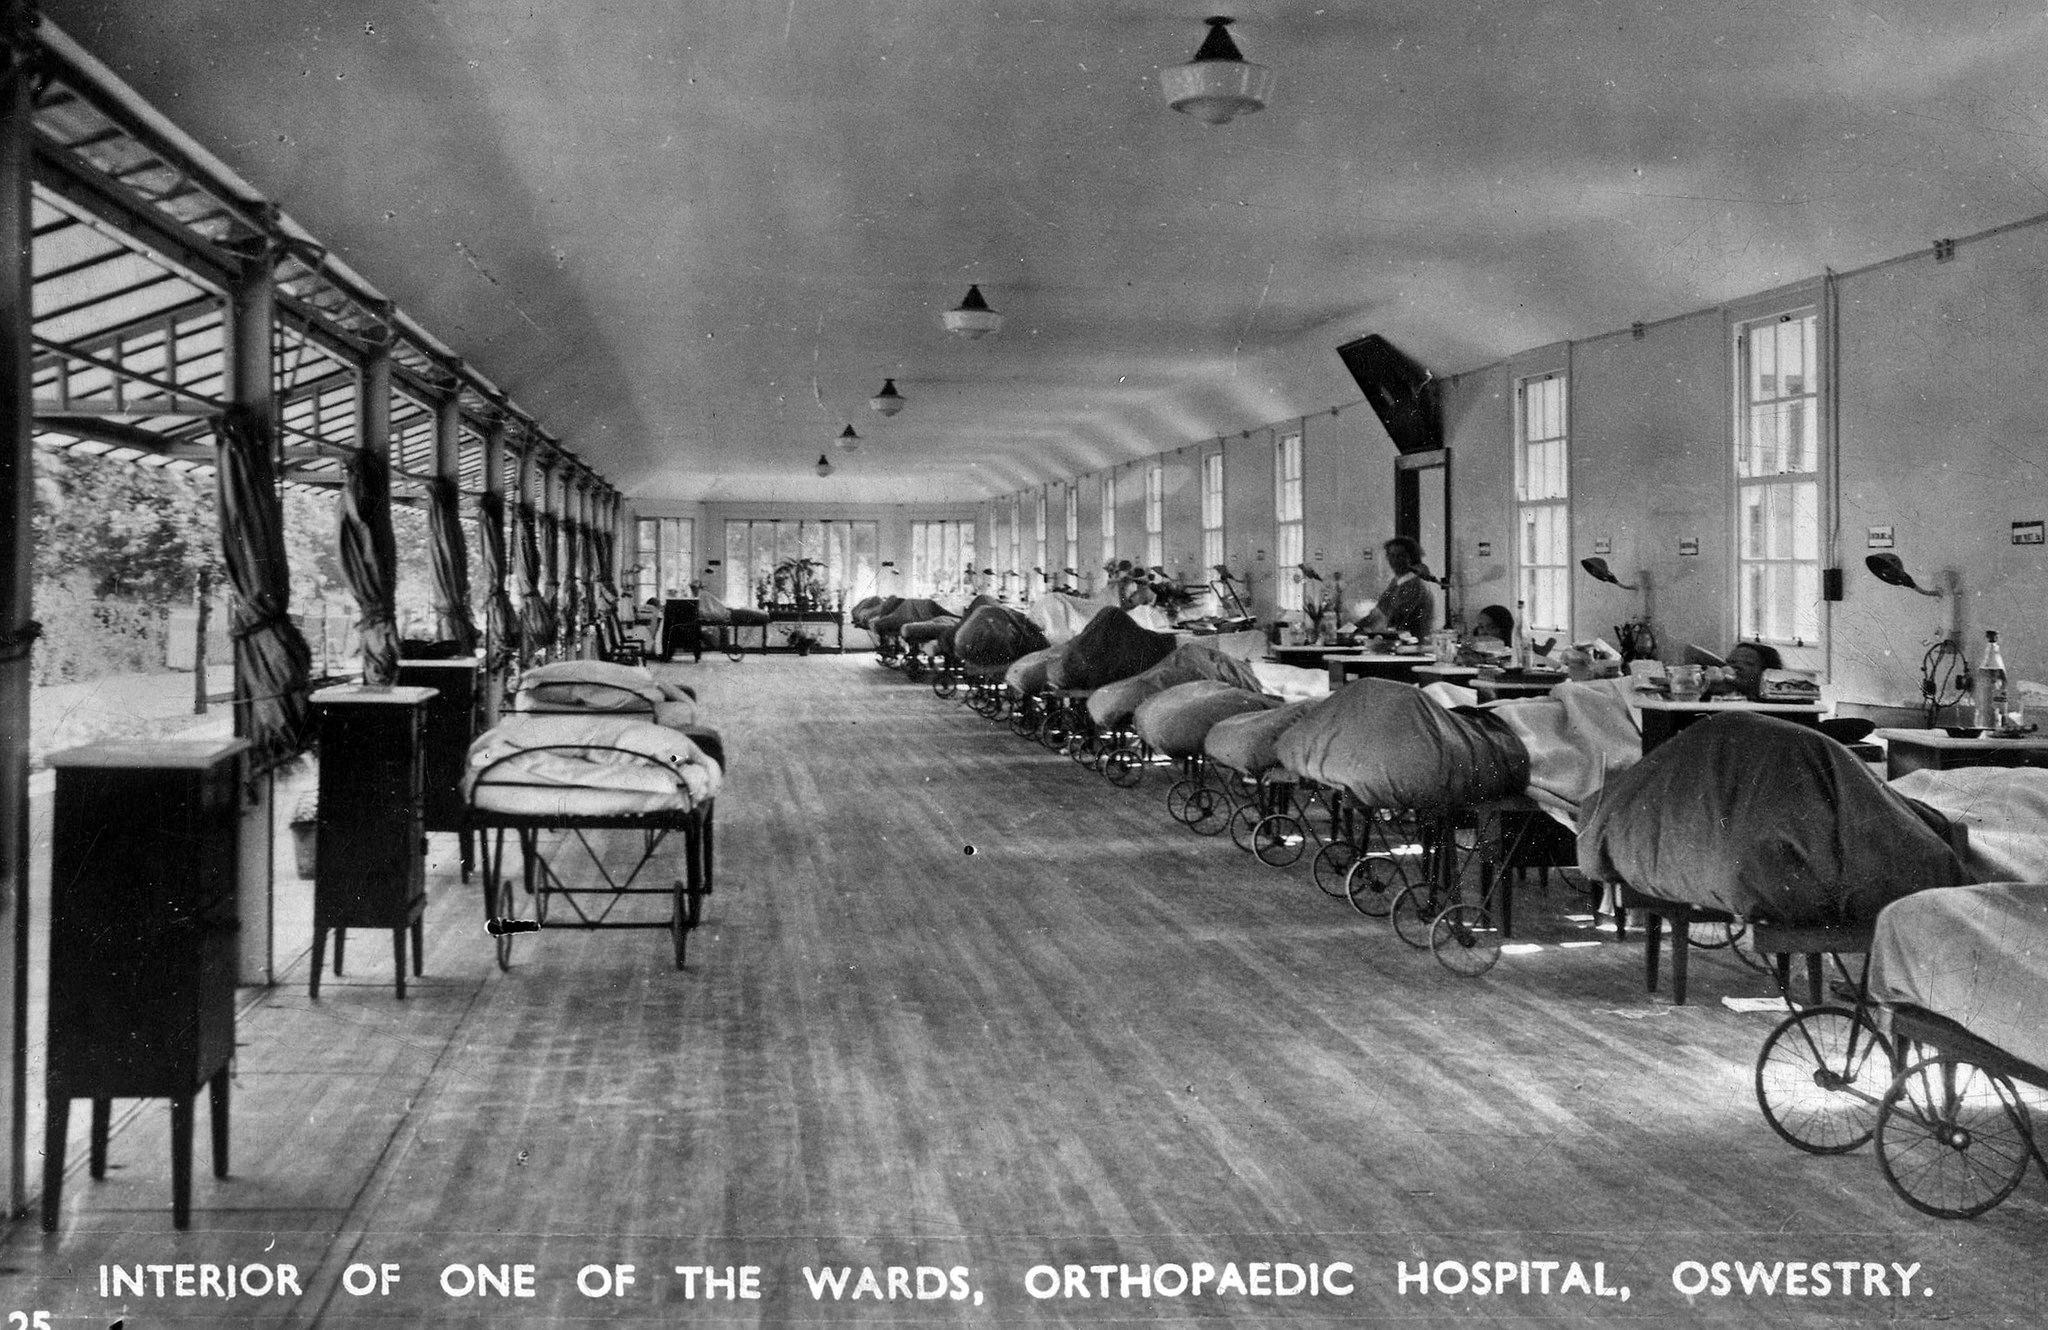 Robert Jones and Agnes Hunt Orthopaedic Hospital, Oswestry c.1910.